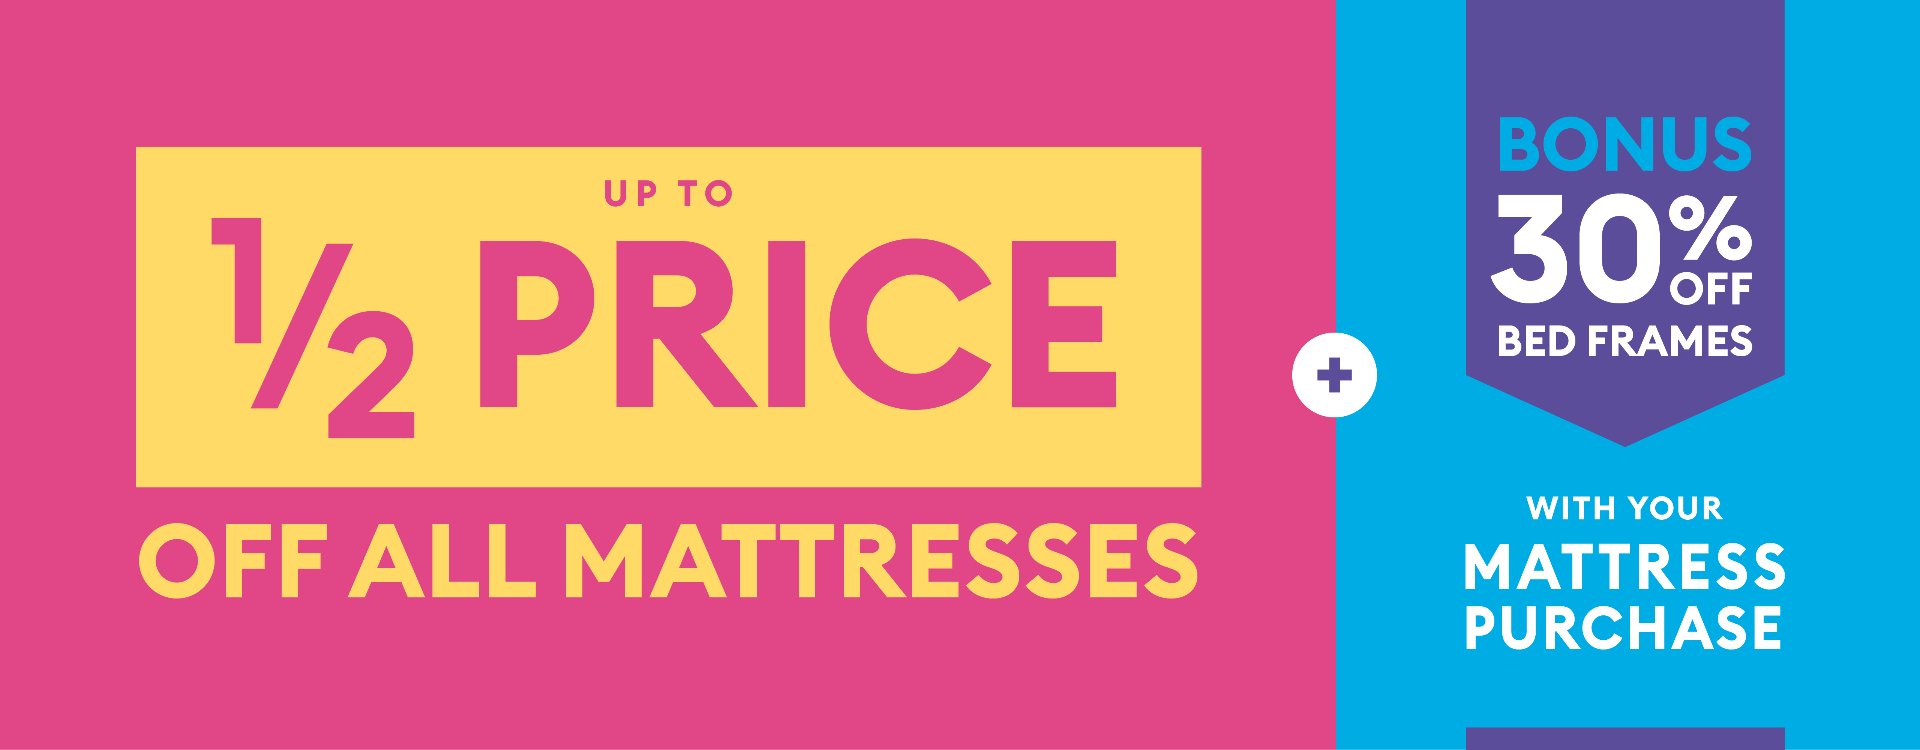 half price mattress terrell tx